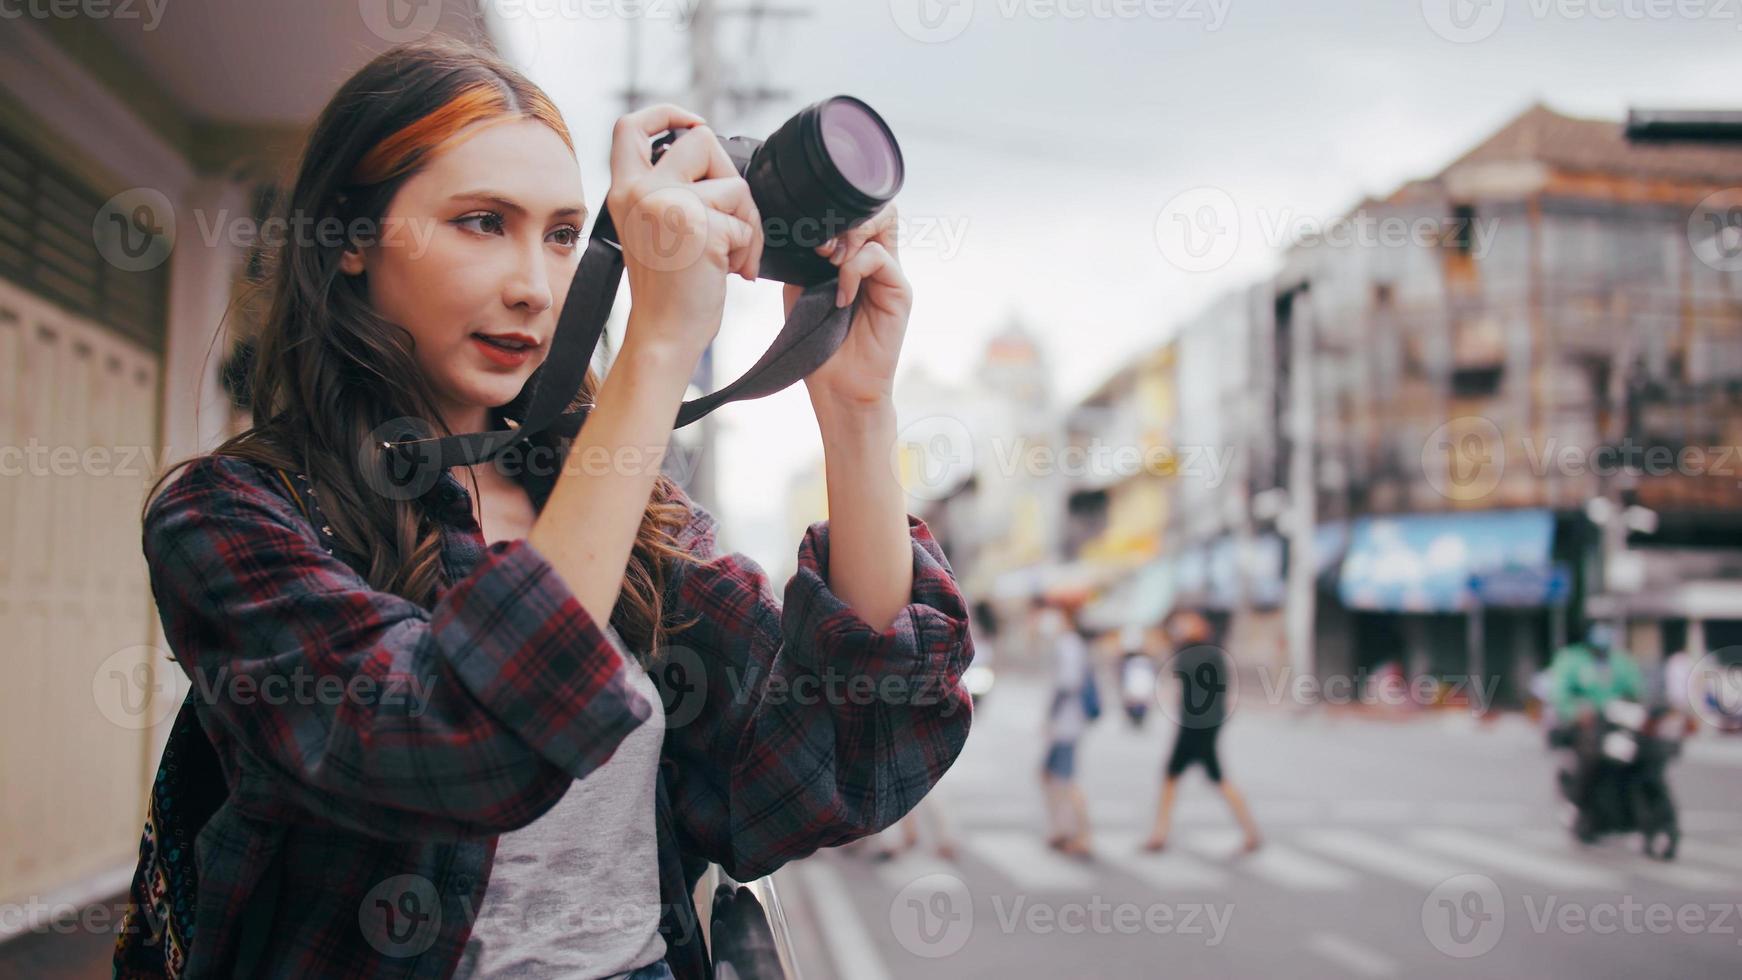 A beautiful woman tourist enjoys taking photos of the city view in Bangkok, Thailand.